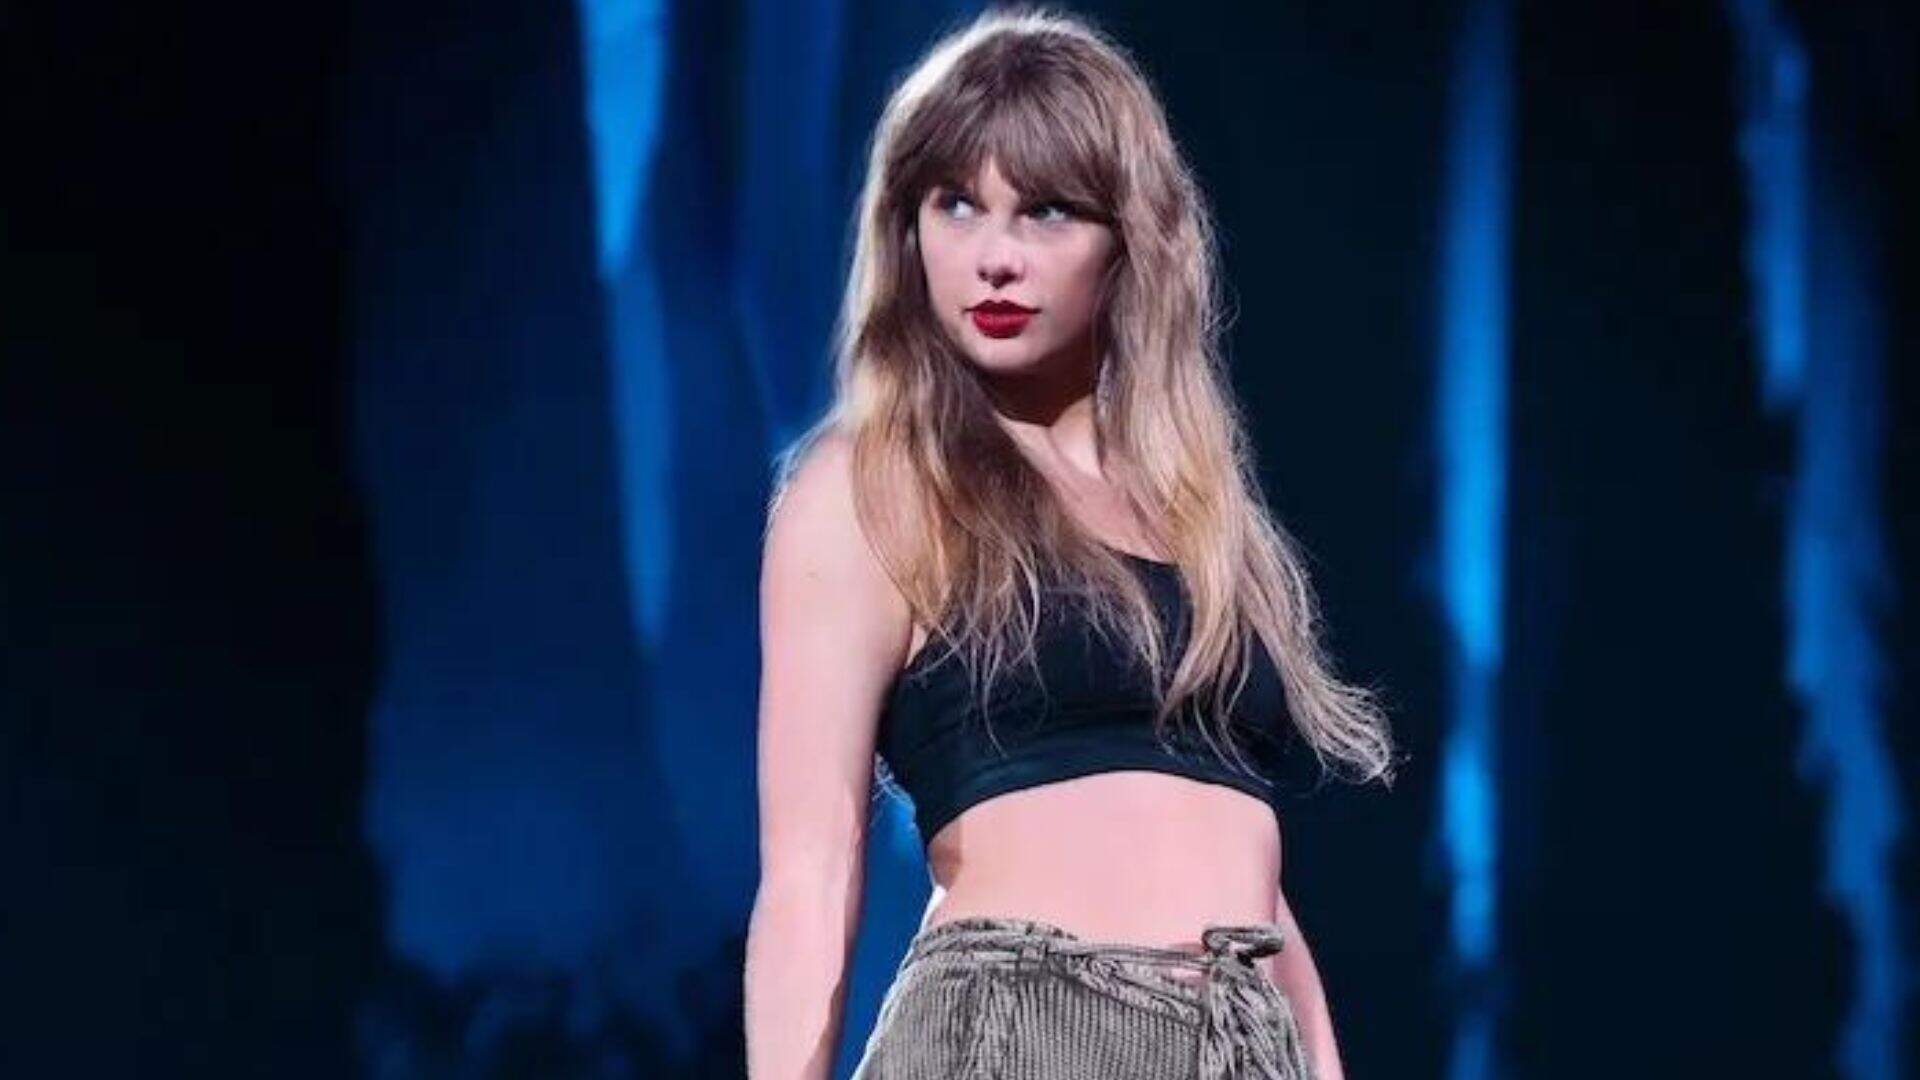 Taylor Swift anuncia adiamento do seu segundo show no Brasil e esclarece real motivo aos fãs - Metropolitana FM